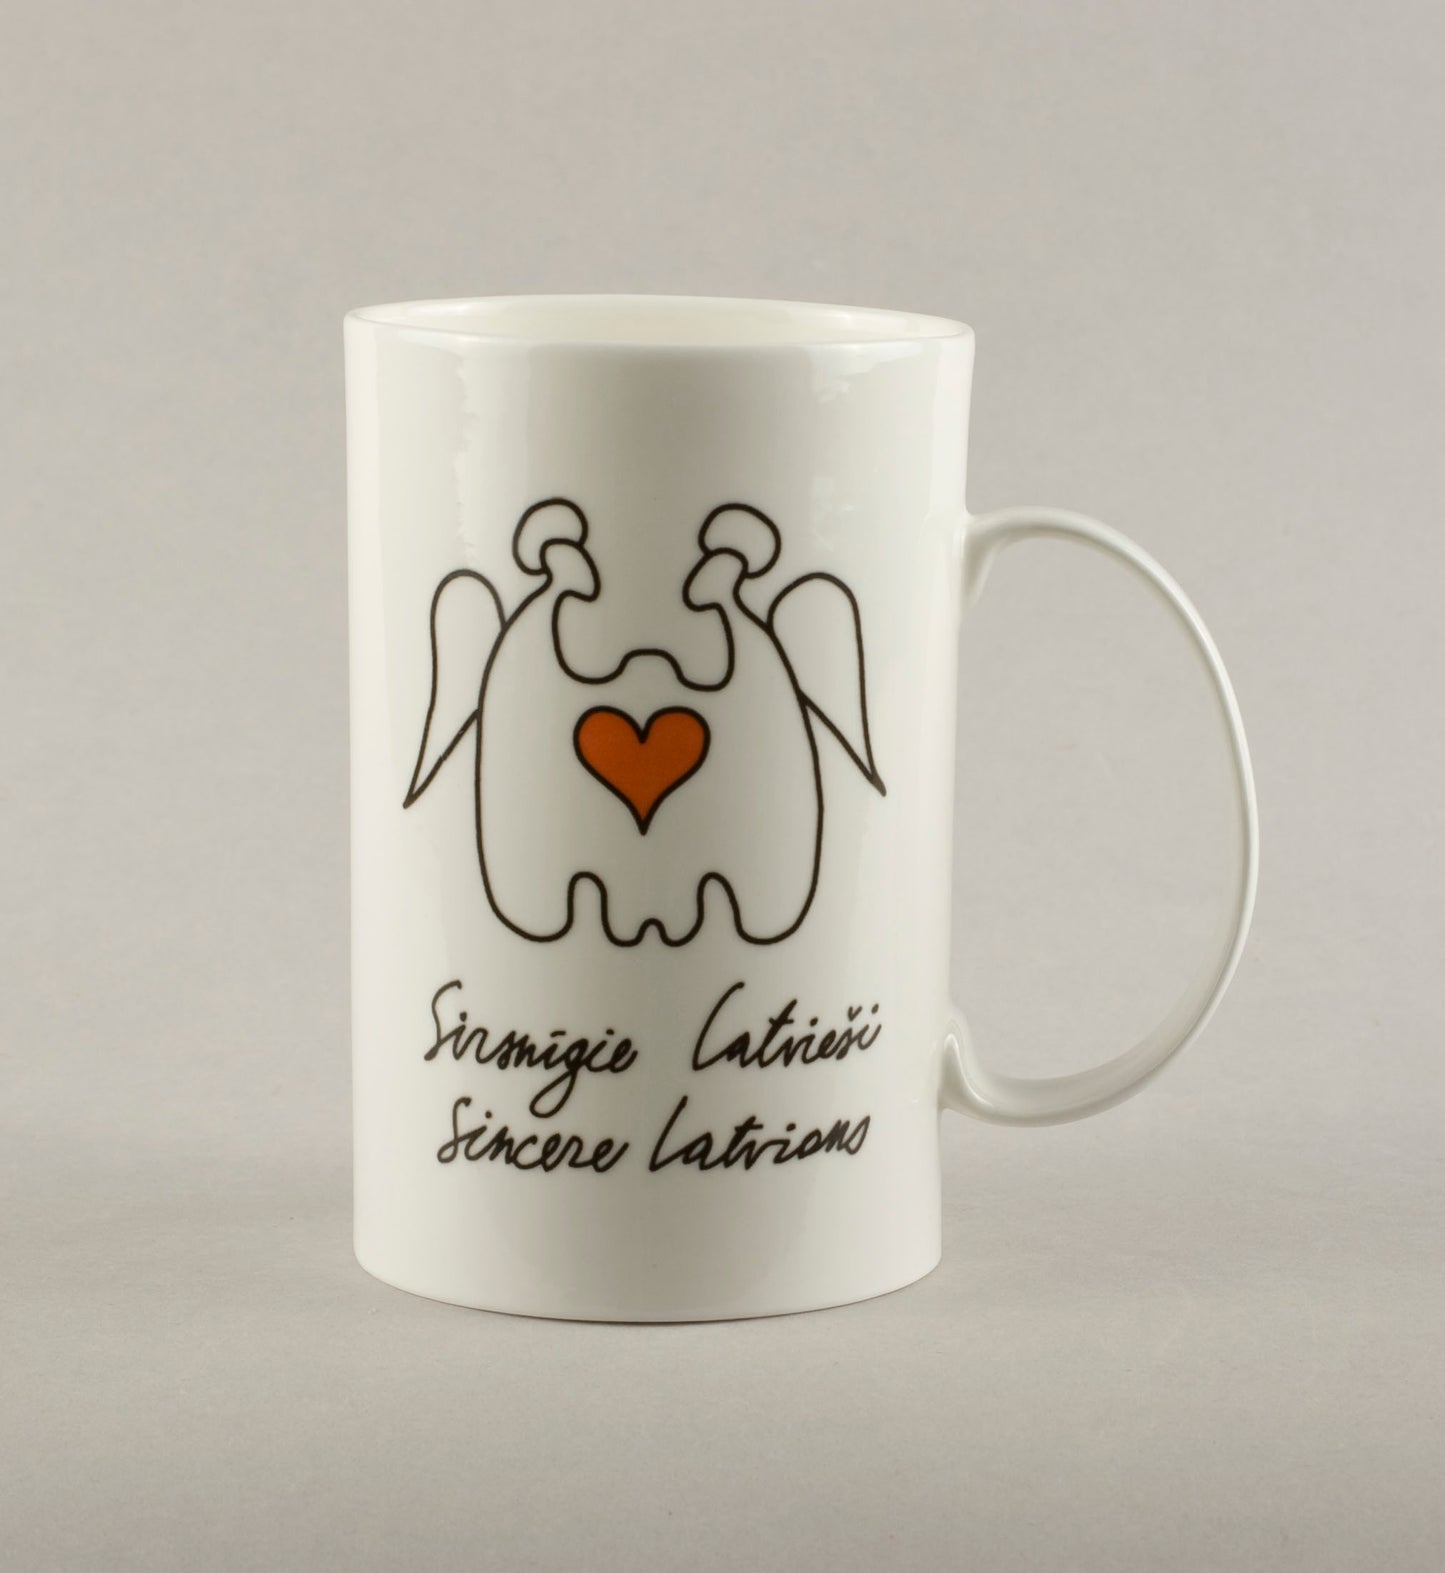 Sincere Latvians. Medium Mug